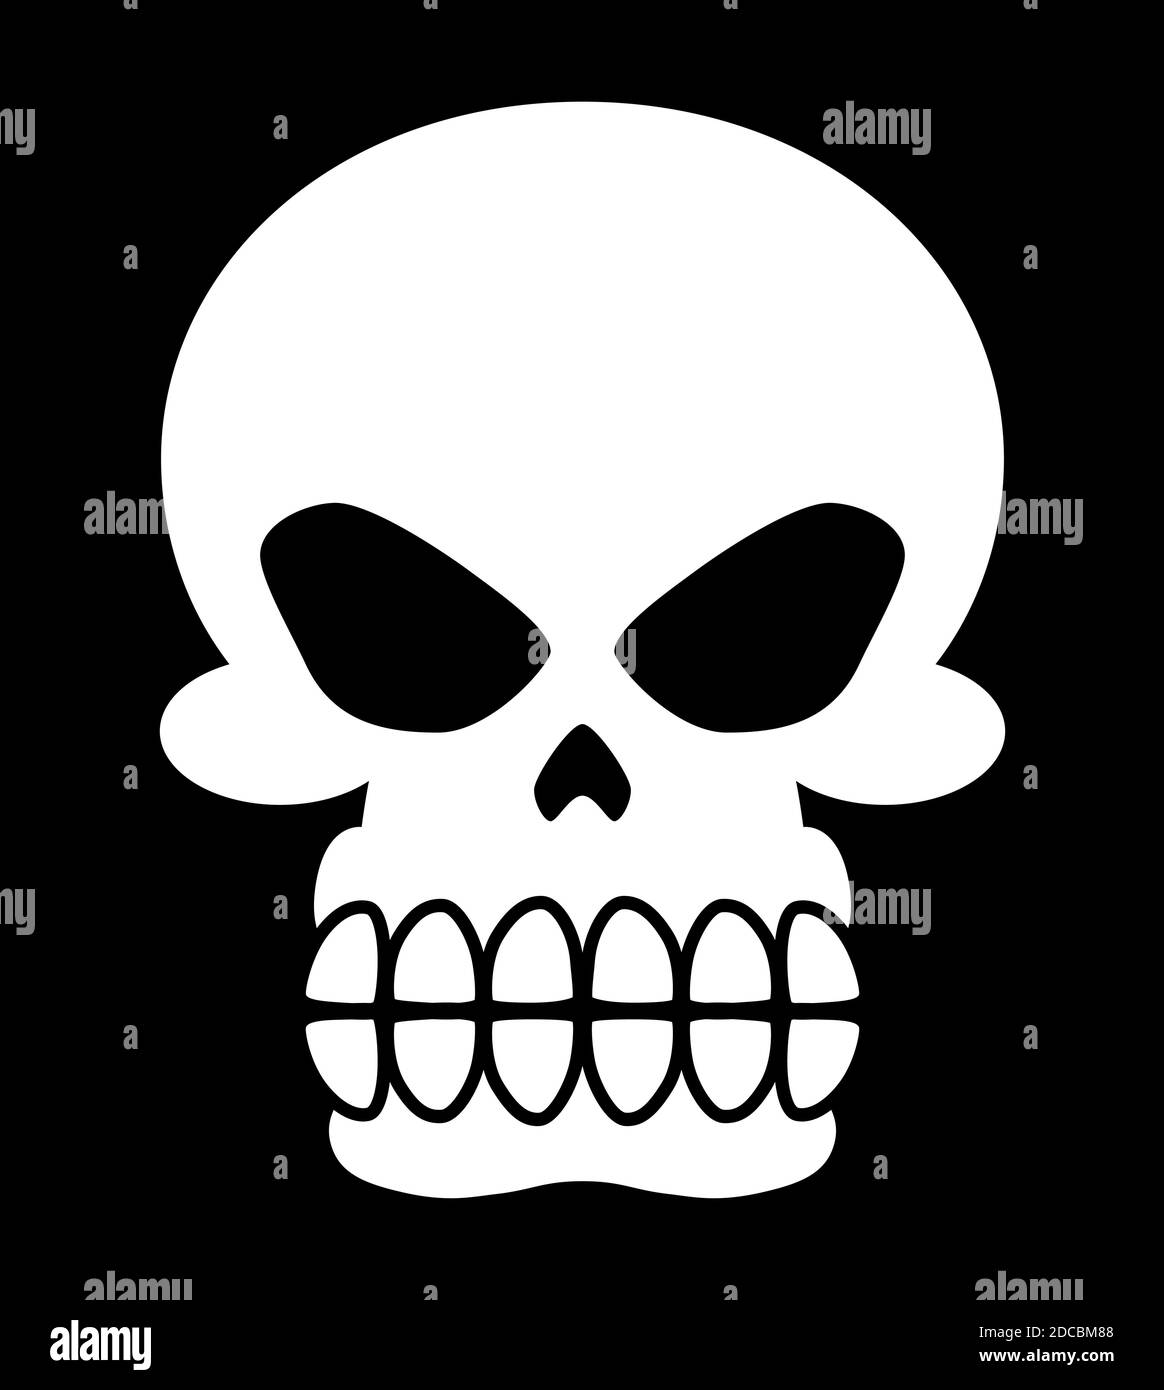 Skull head tattoo Royalty Free Vector Image - VectorStock